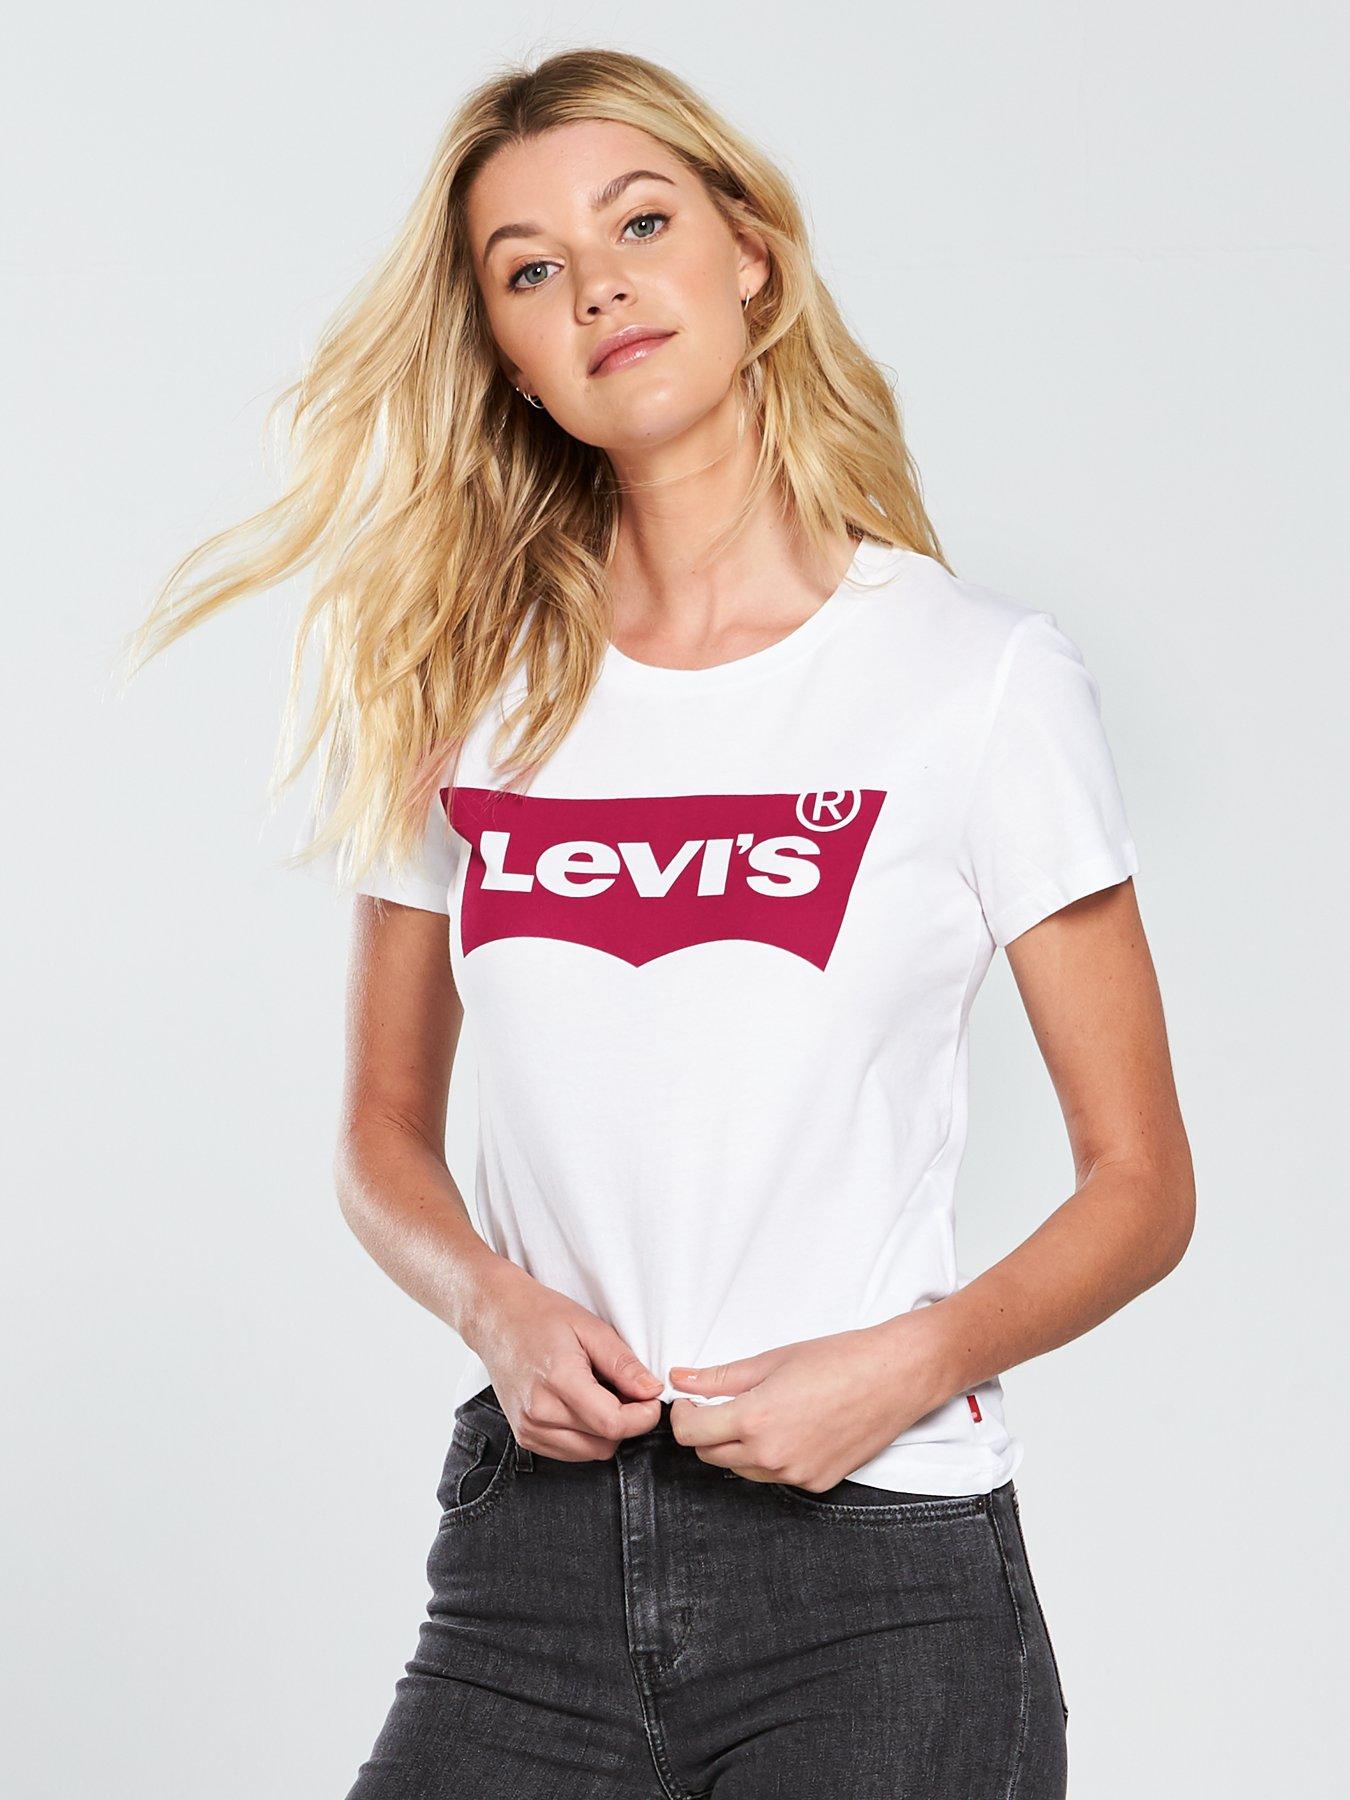 levis shirt white